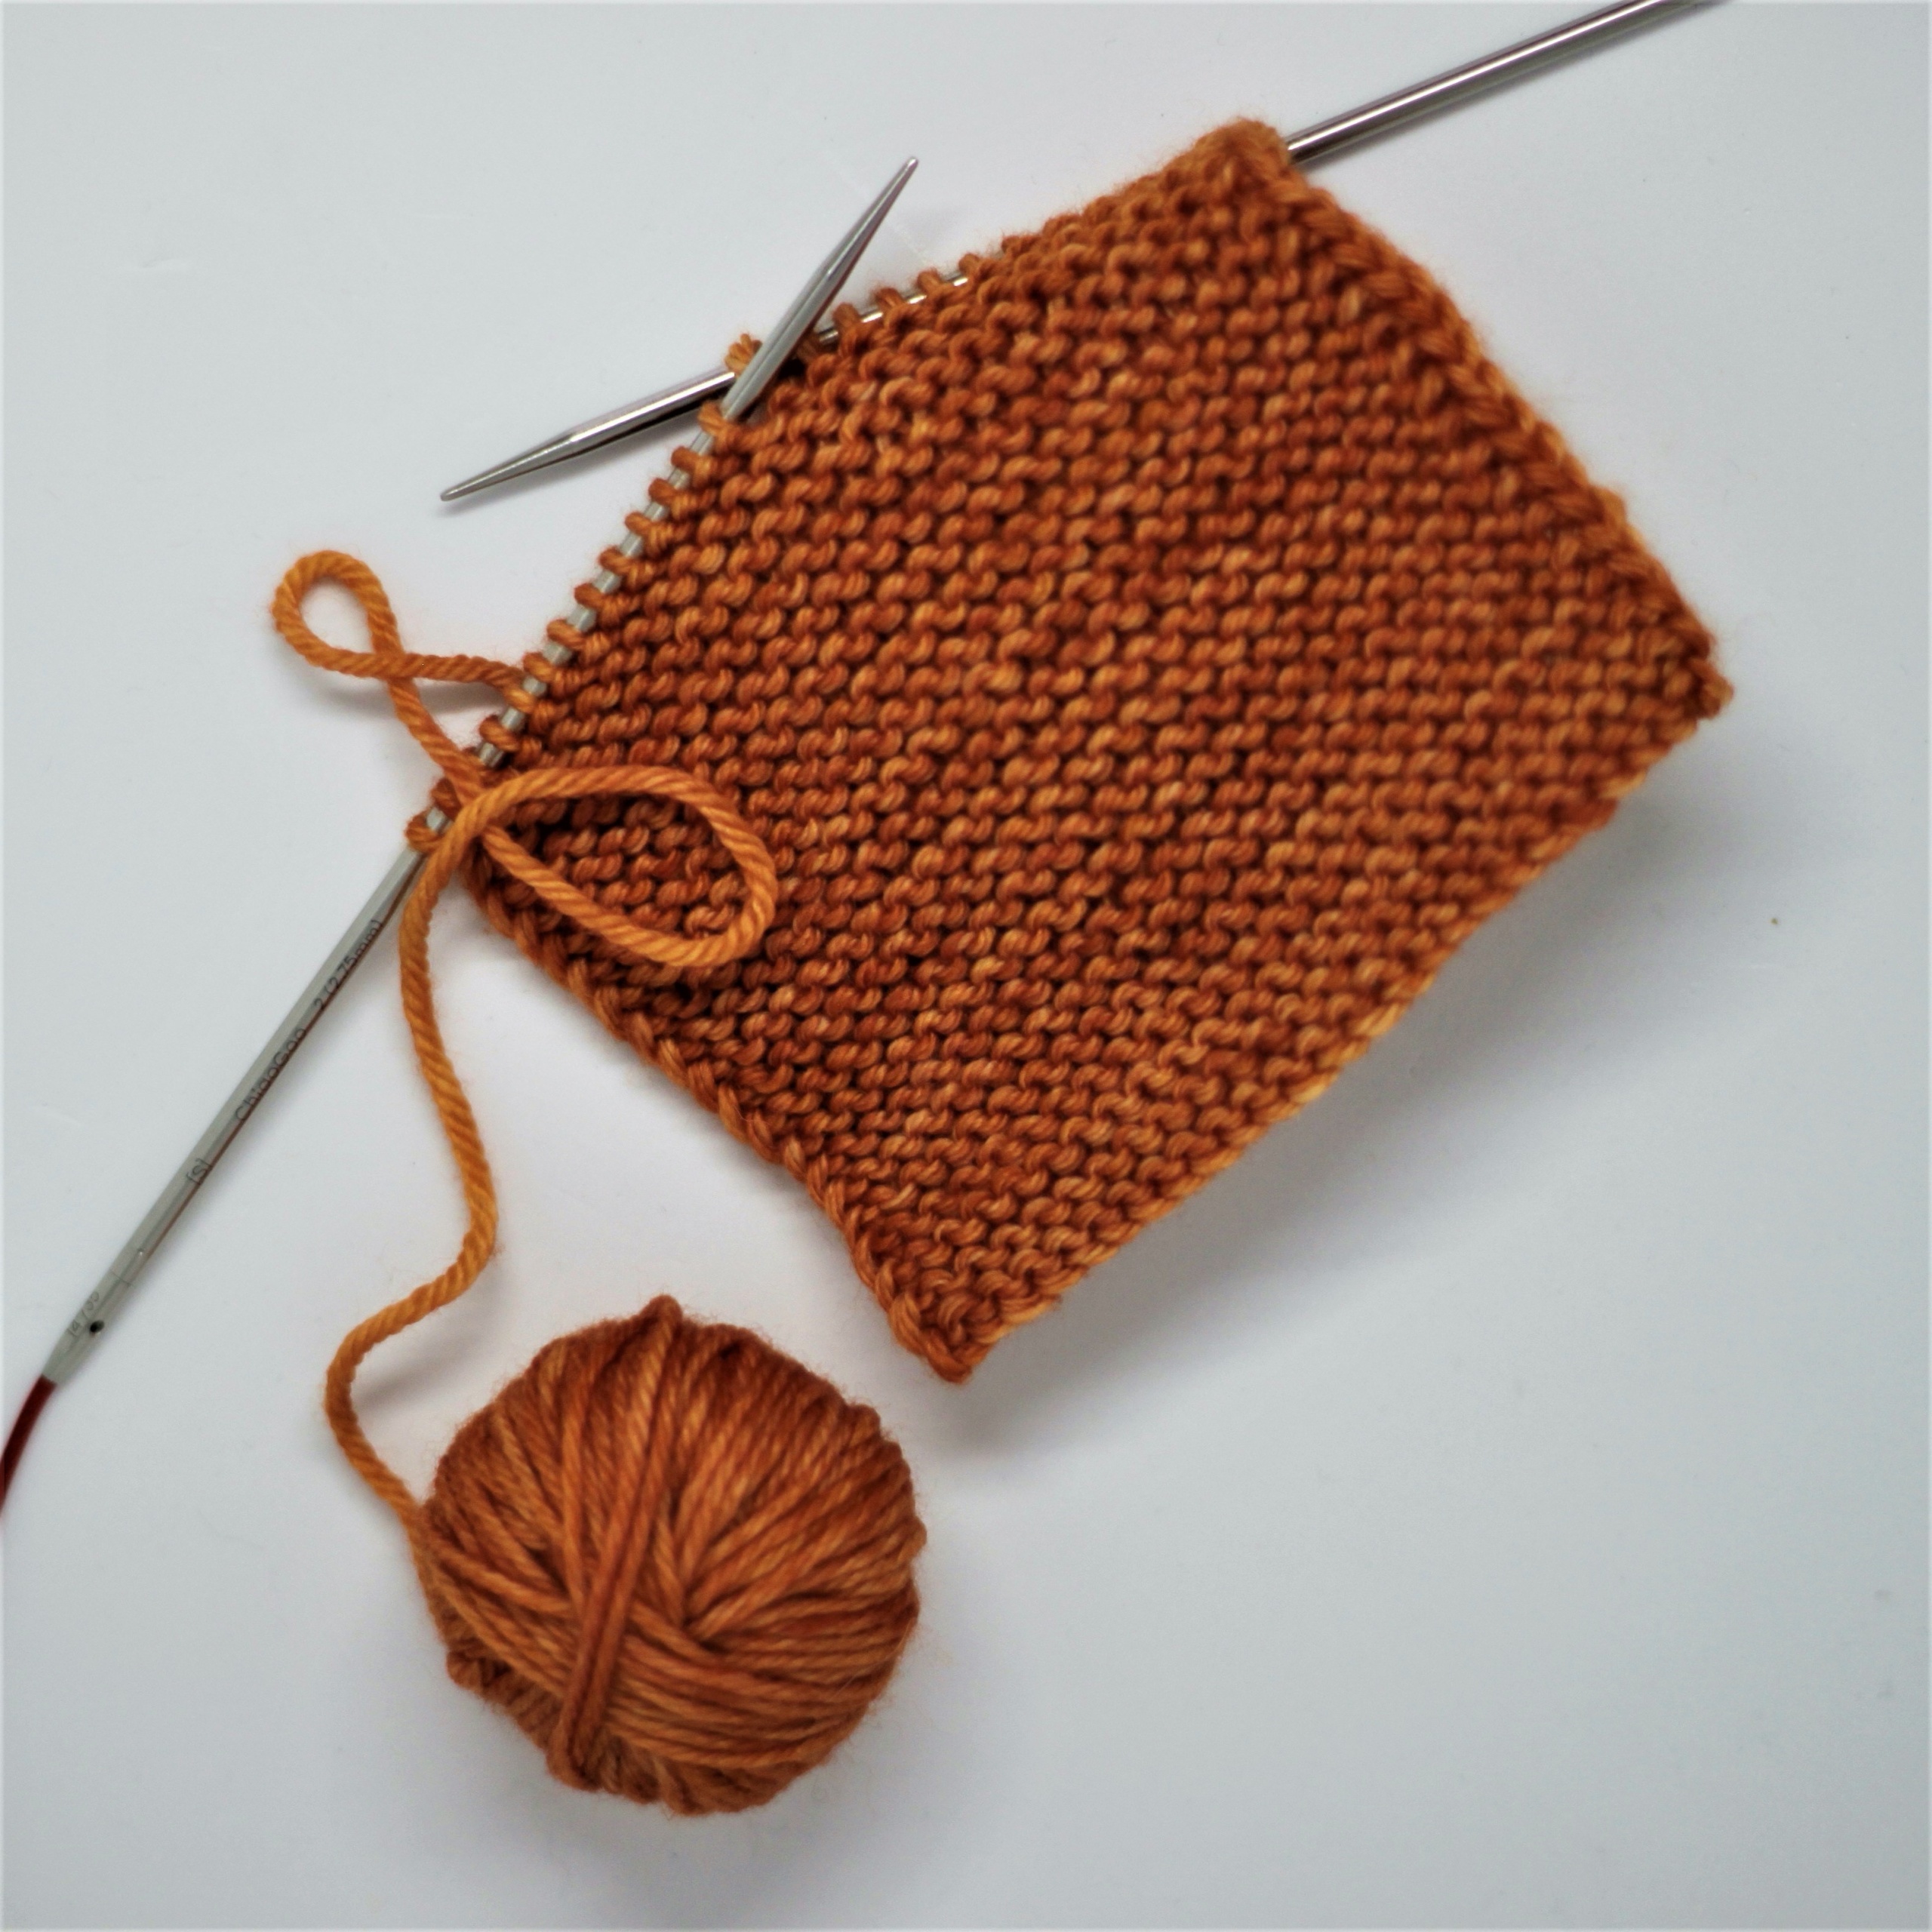 Knitting project with orange yarn